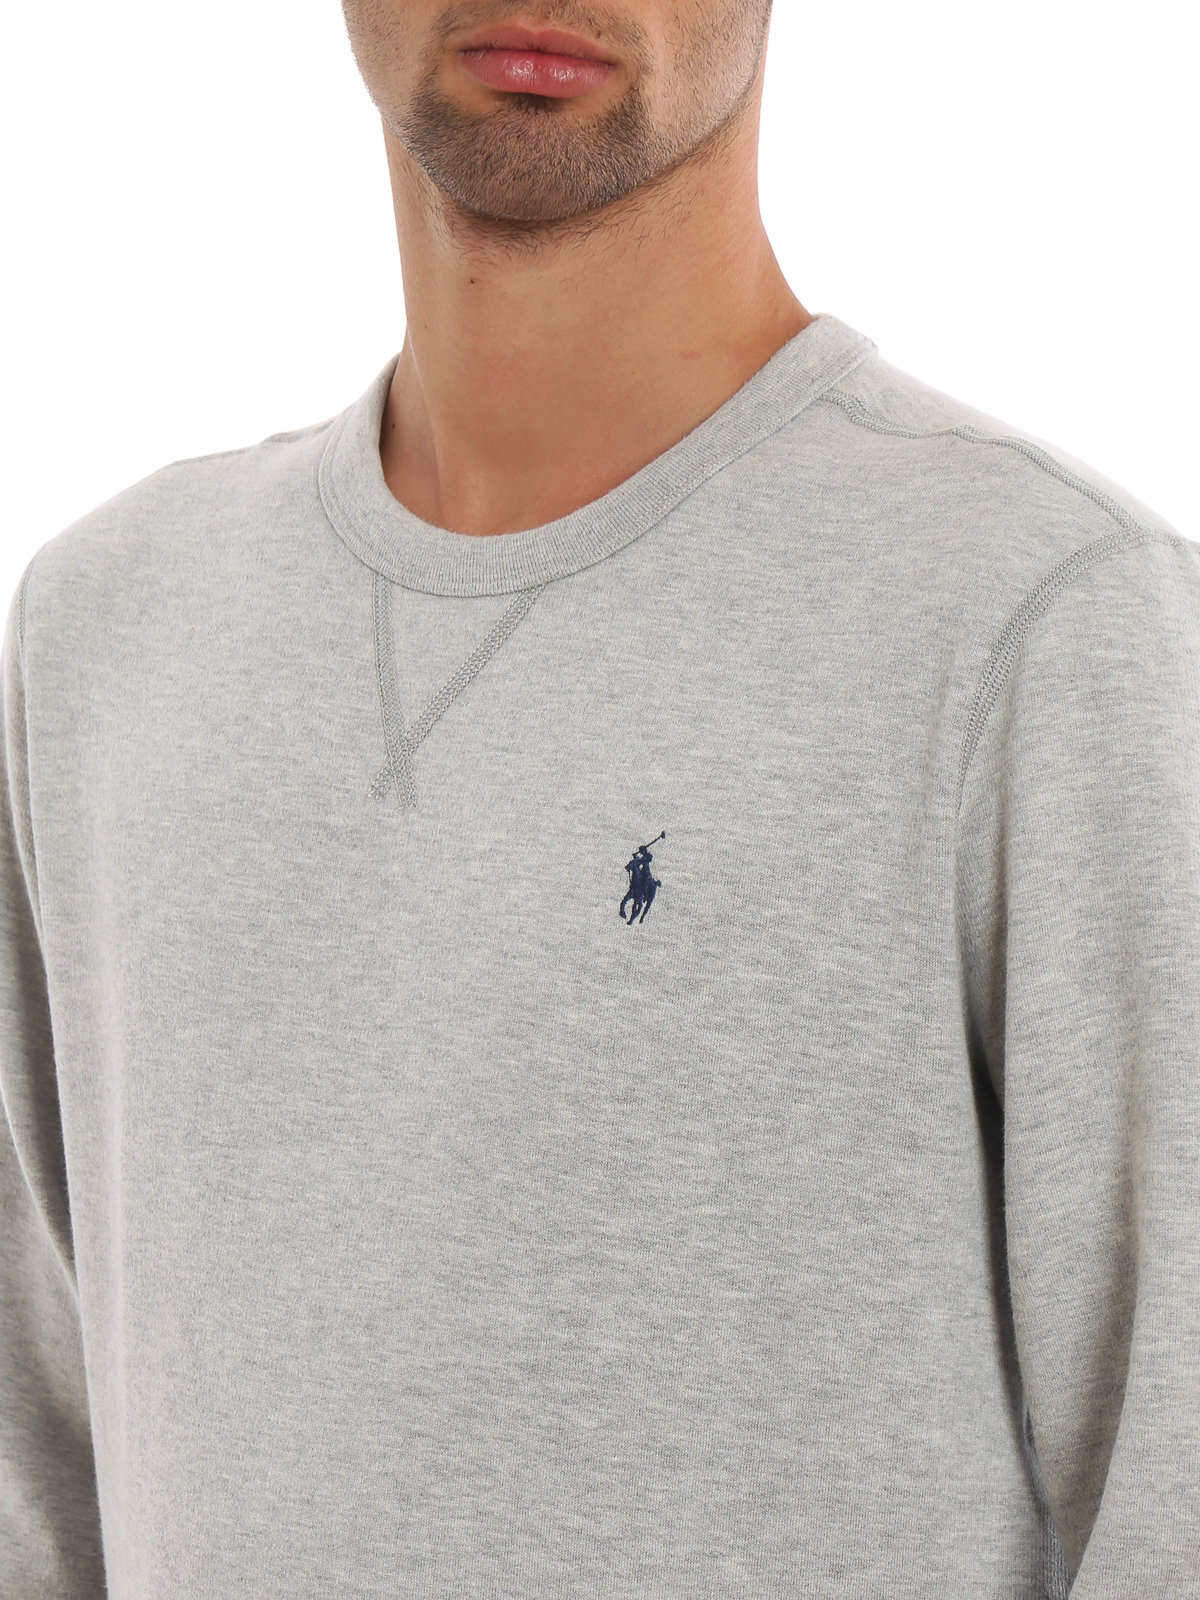 Sweatshirts & Sweaters Polo Ralph Lauren - Grey cotton blend sweatshirt -  710766772004